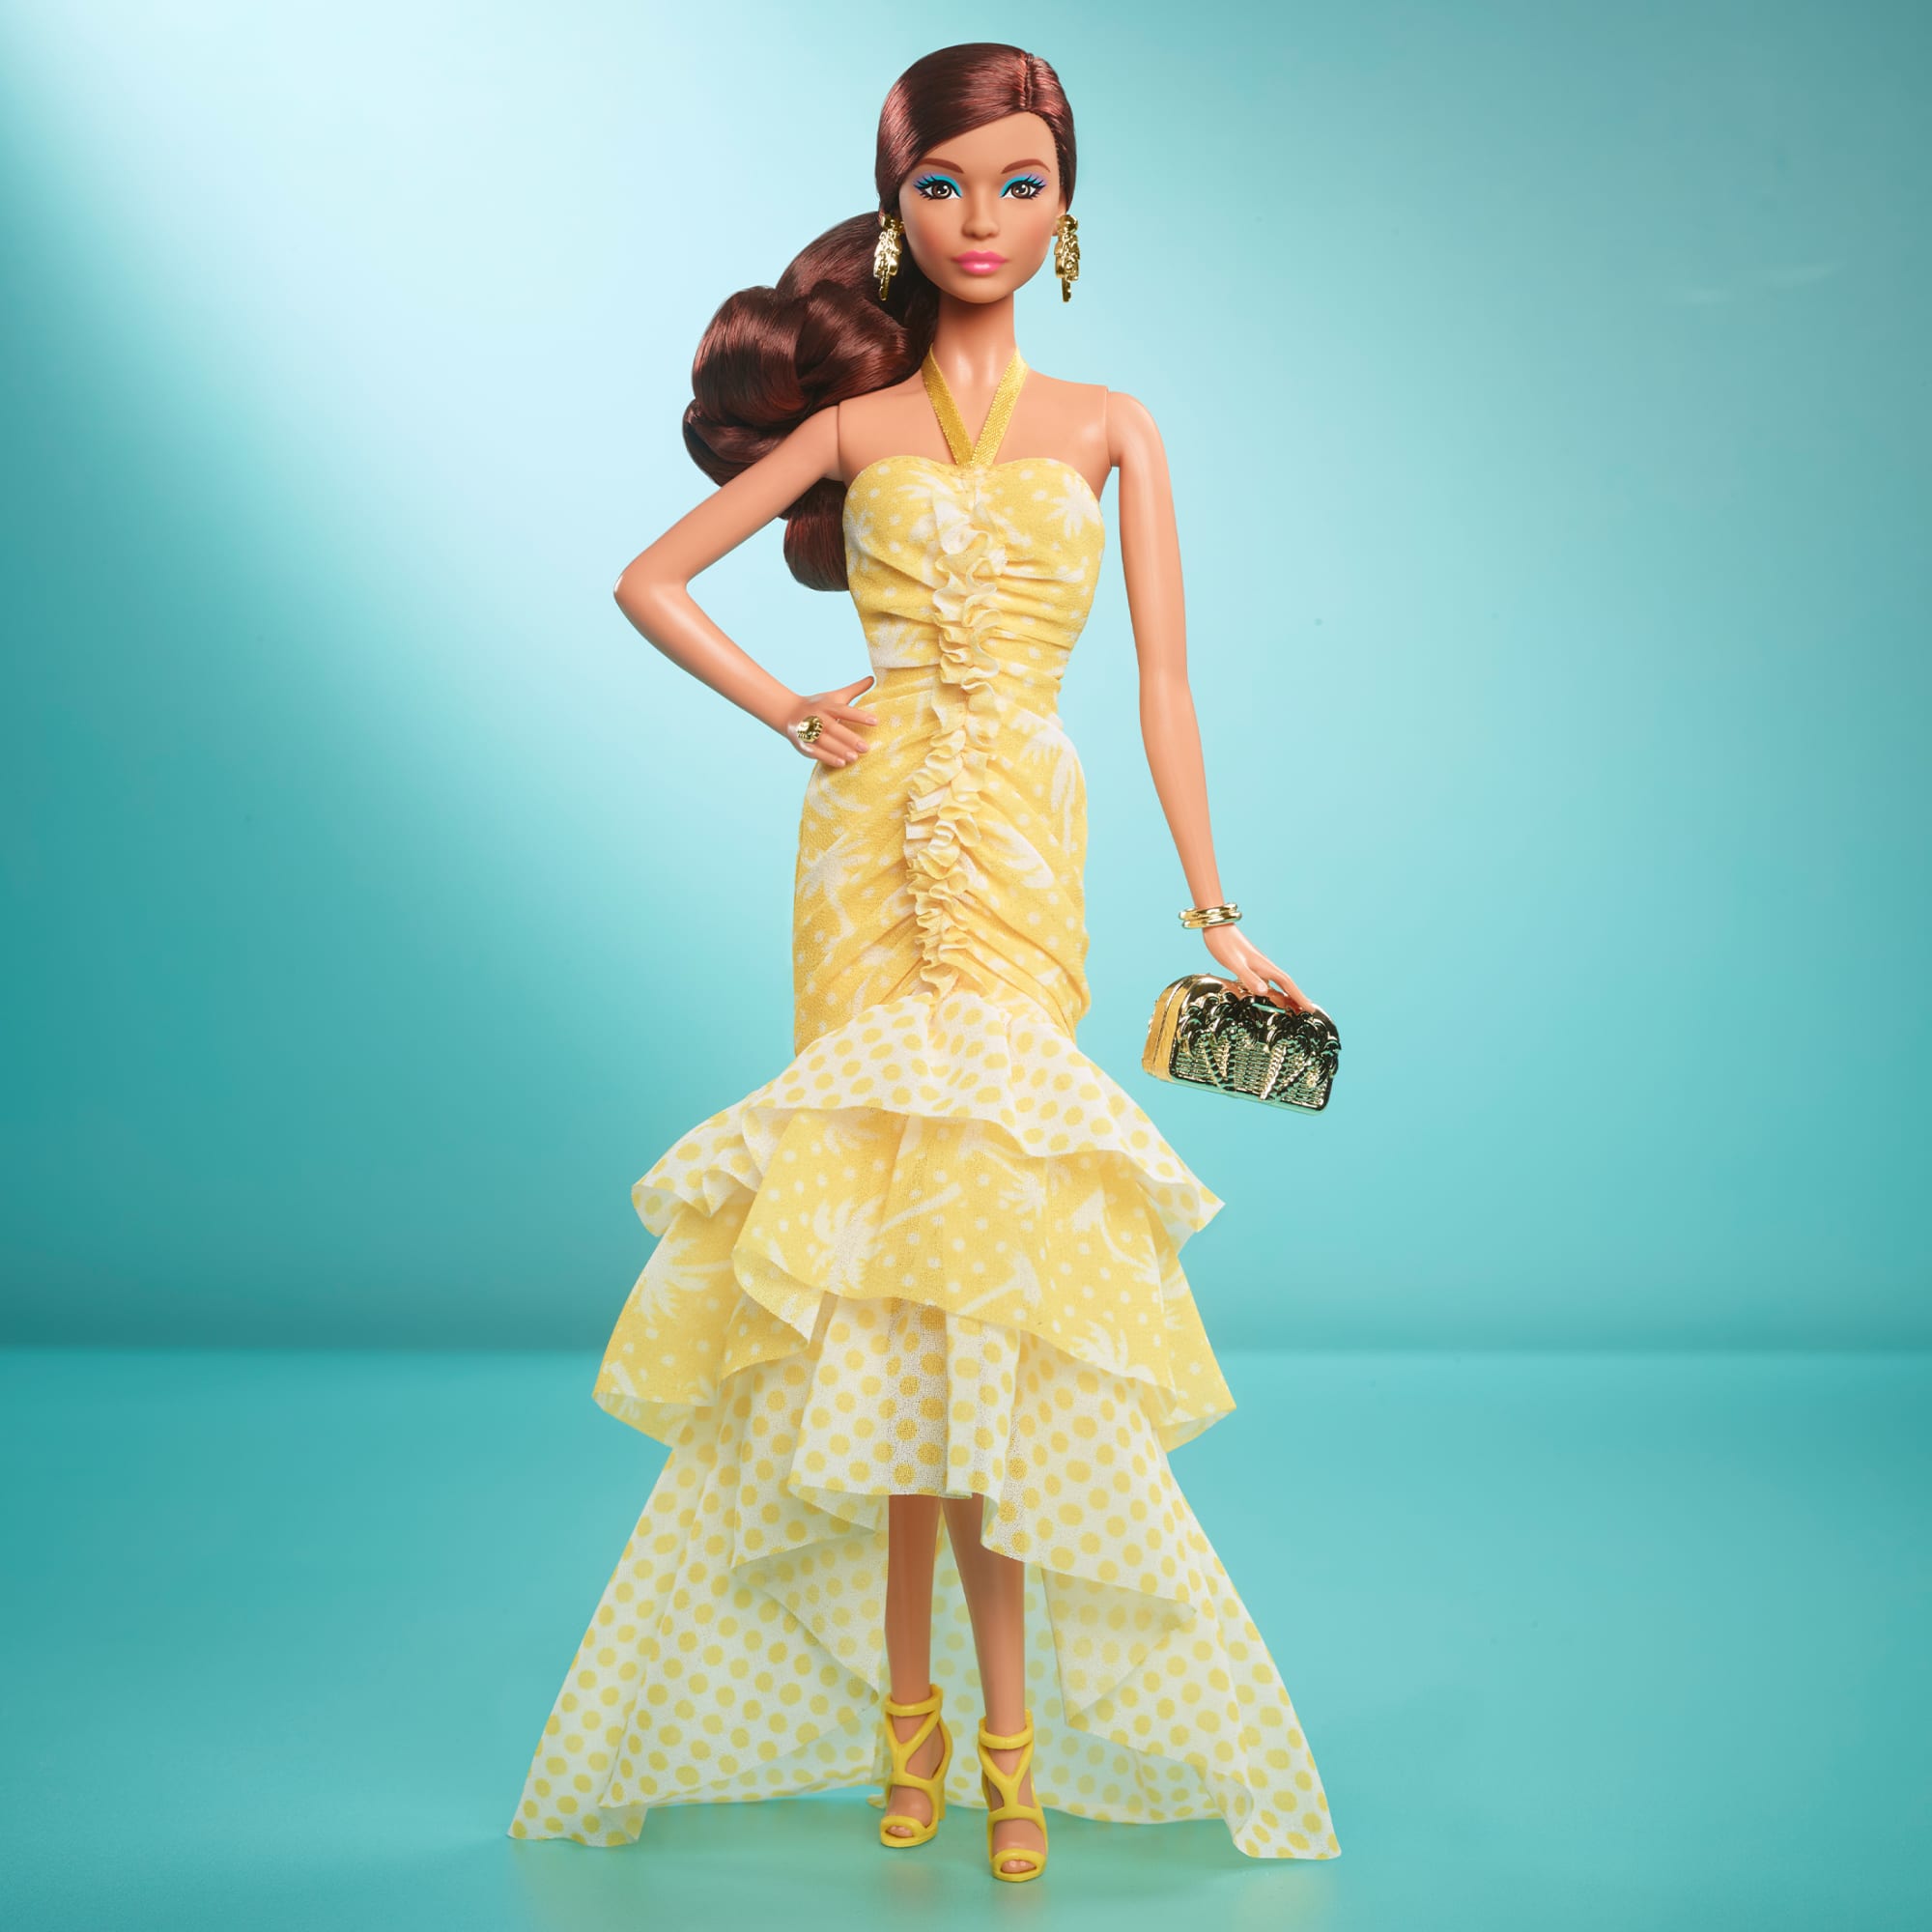 Barbie 35th Anniversary Teresa Doll